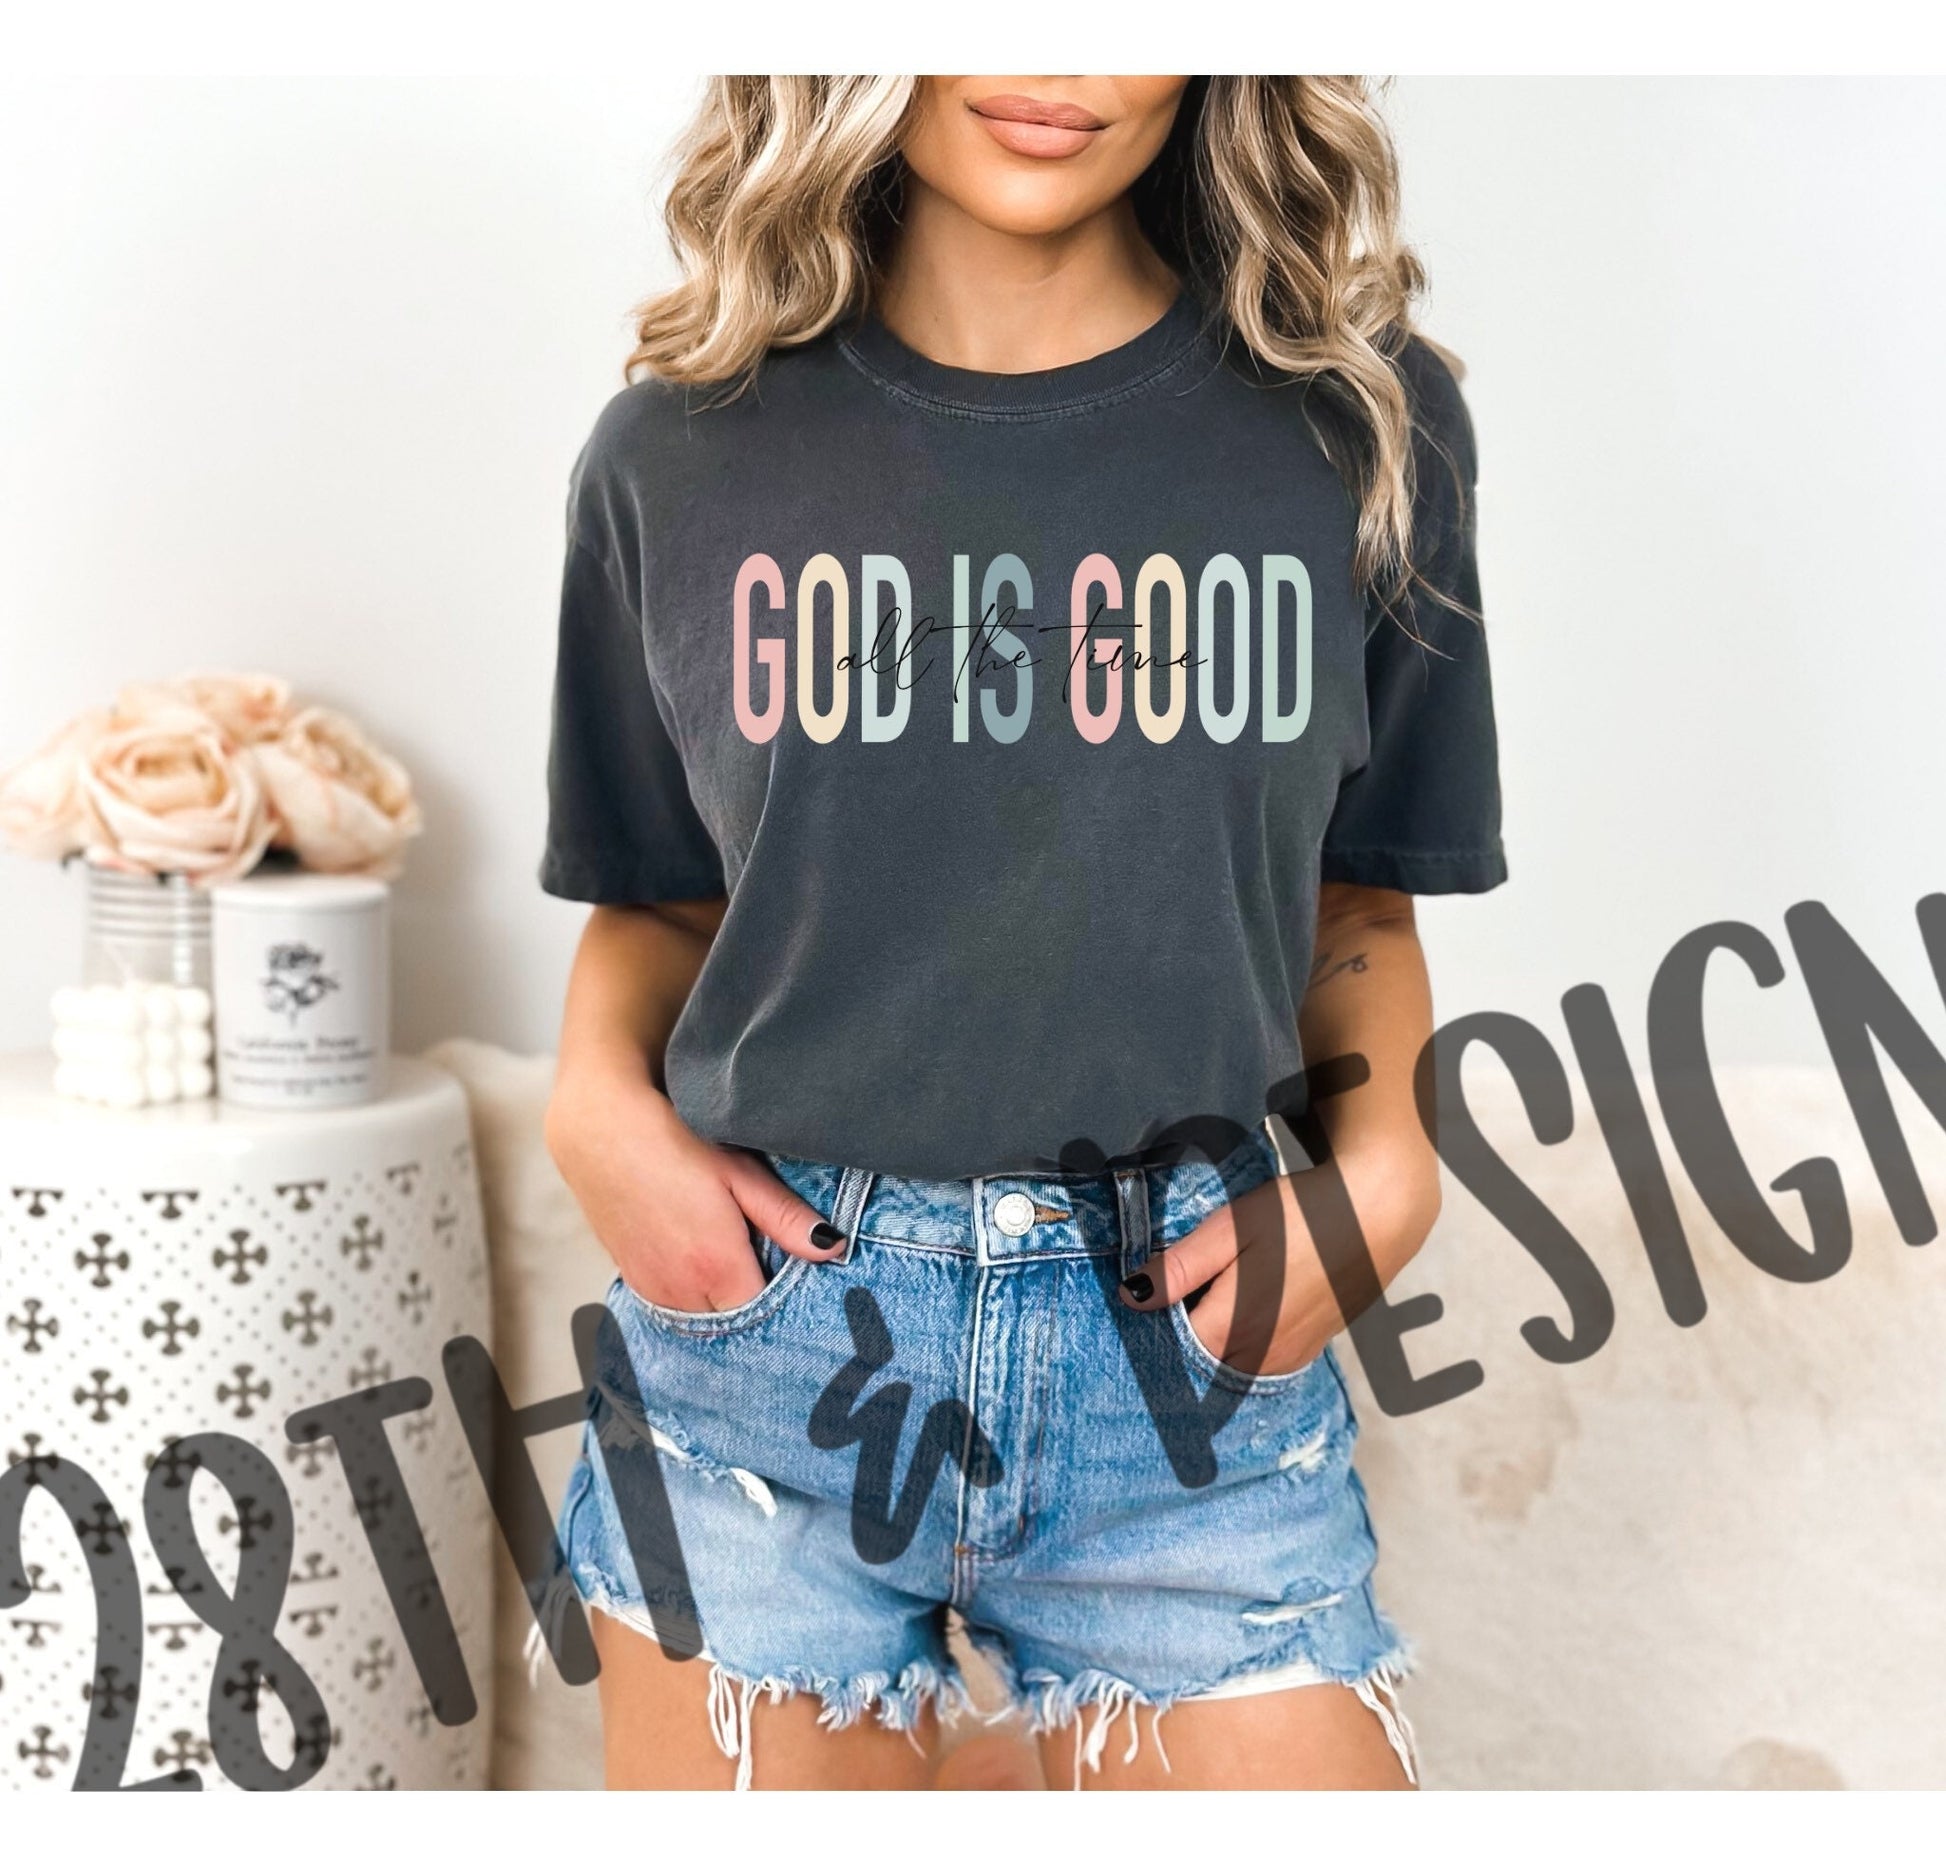 God is good all the time, sweatshirt or tee